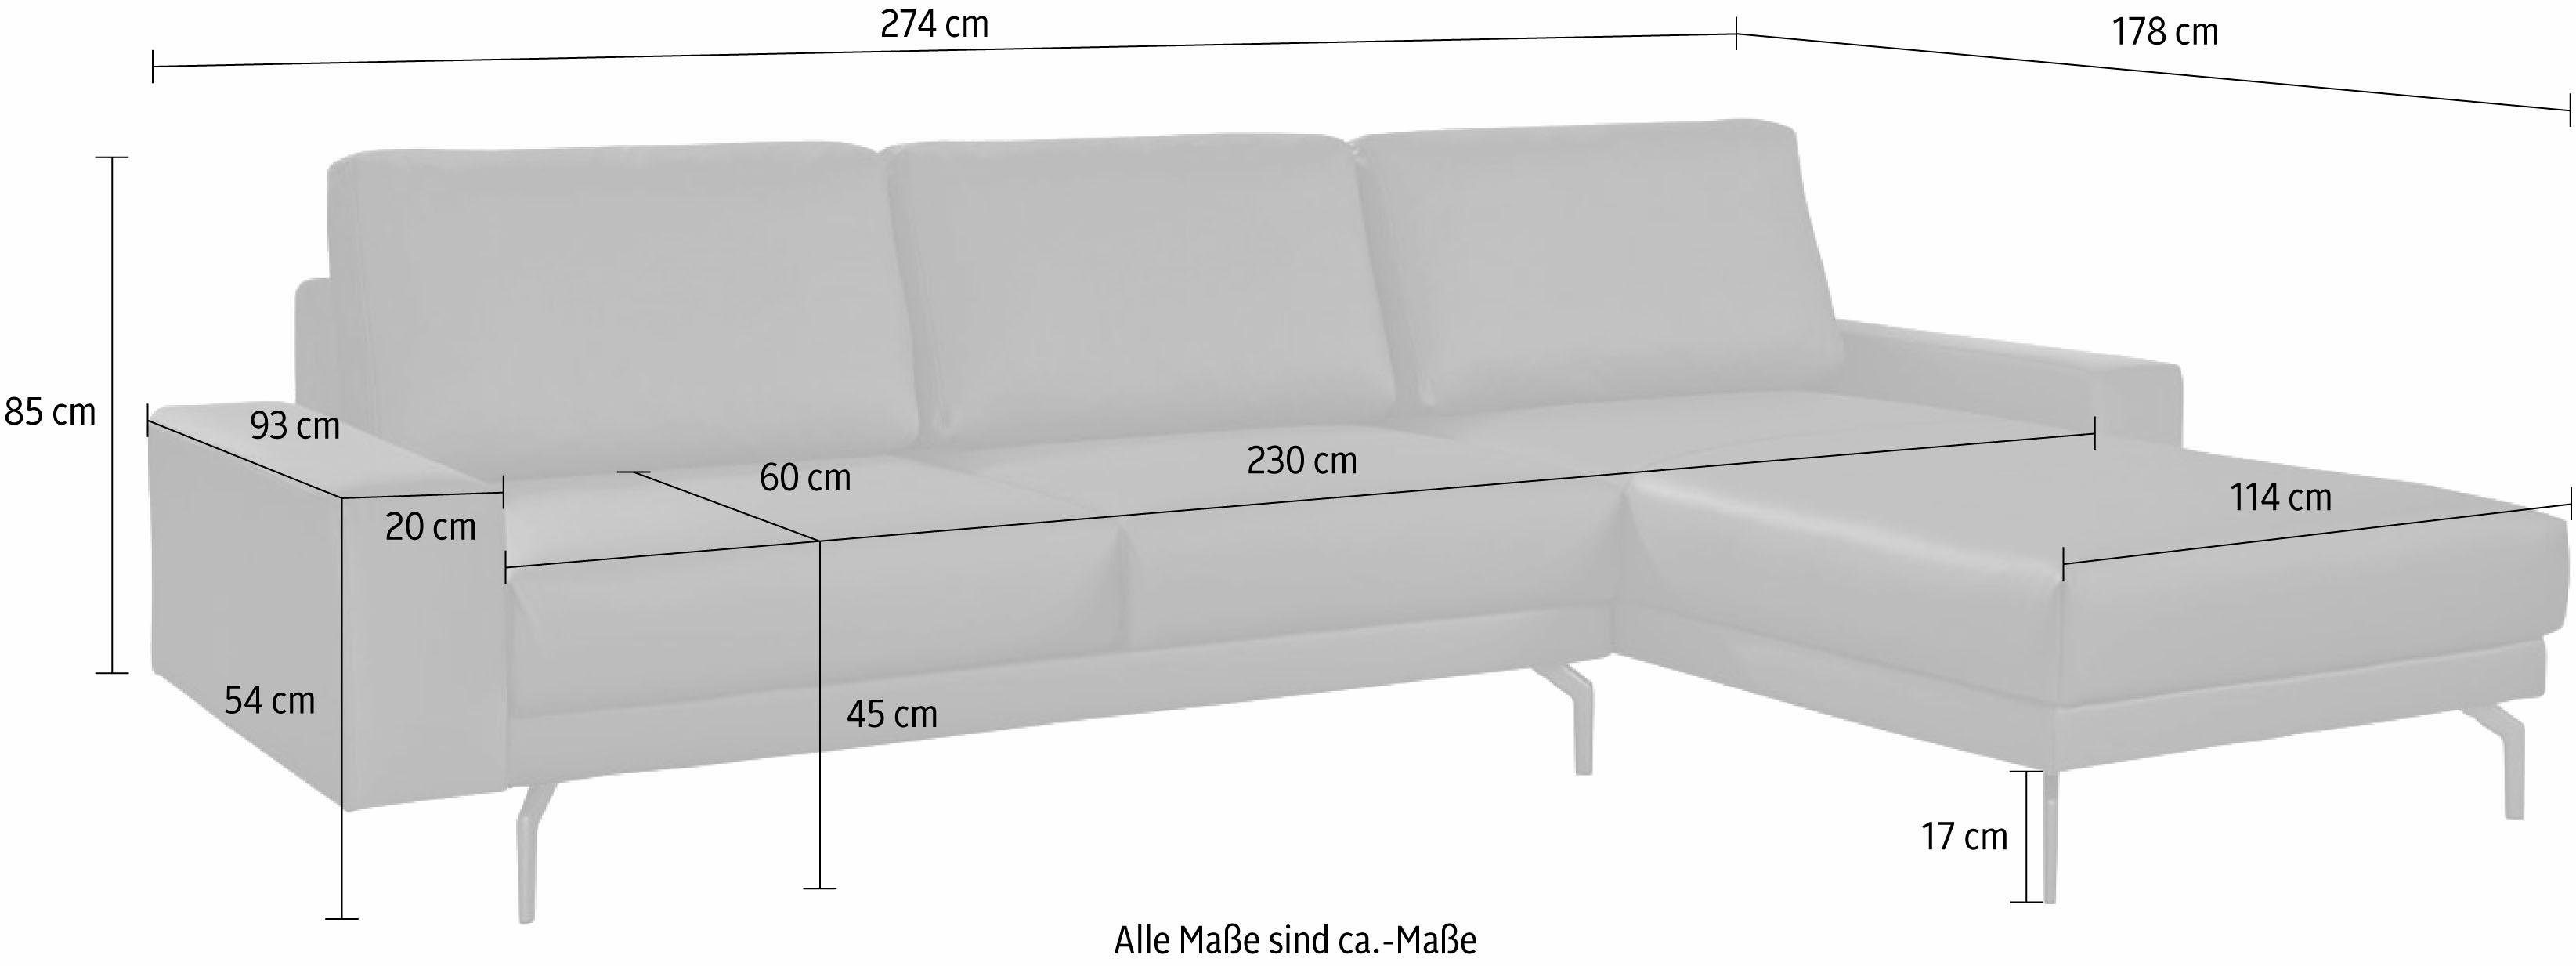 274 Ecksofa sofa niedrig, breit hülsta und umbragrau, Armlehne Breite cm Alugussfüße hs.450, in